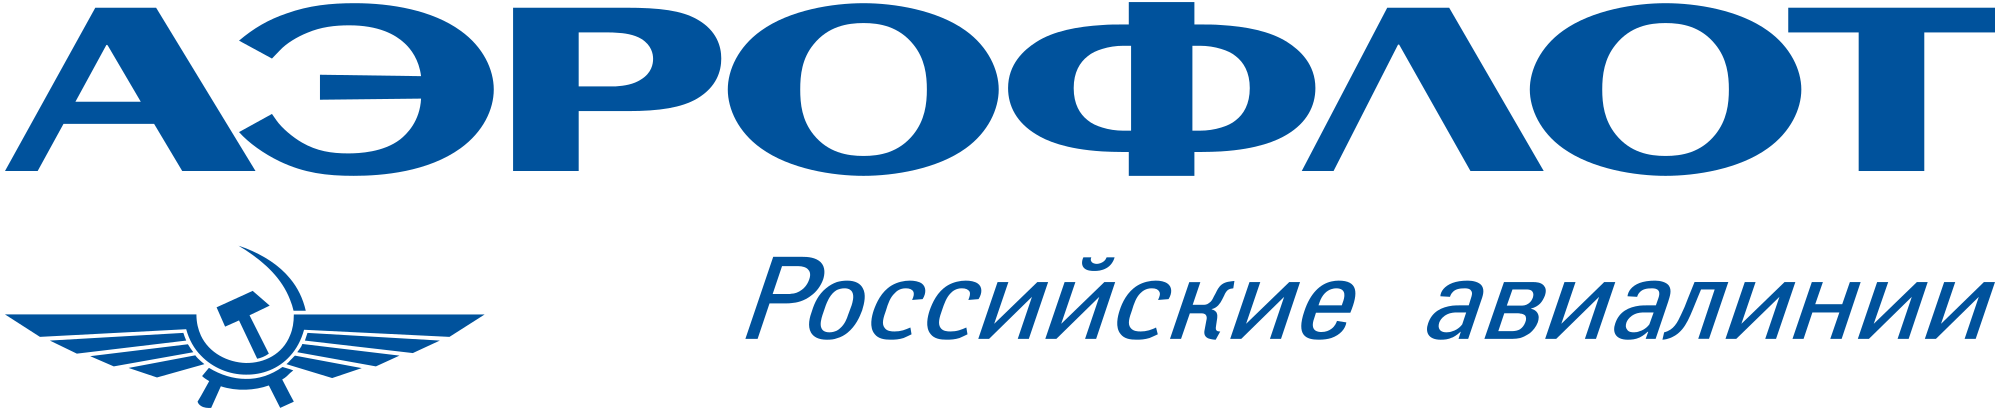 Logo of Aeroflot · Transport